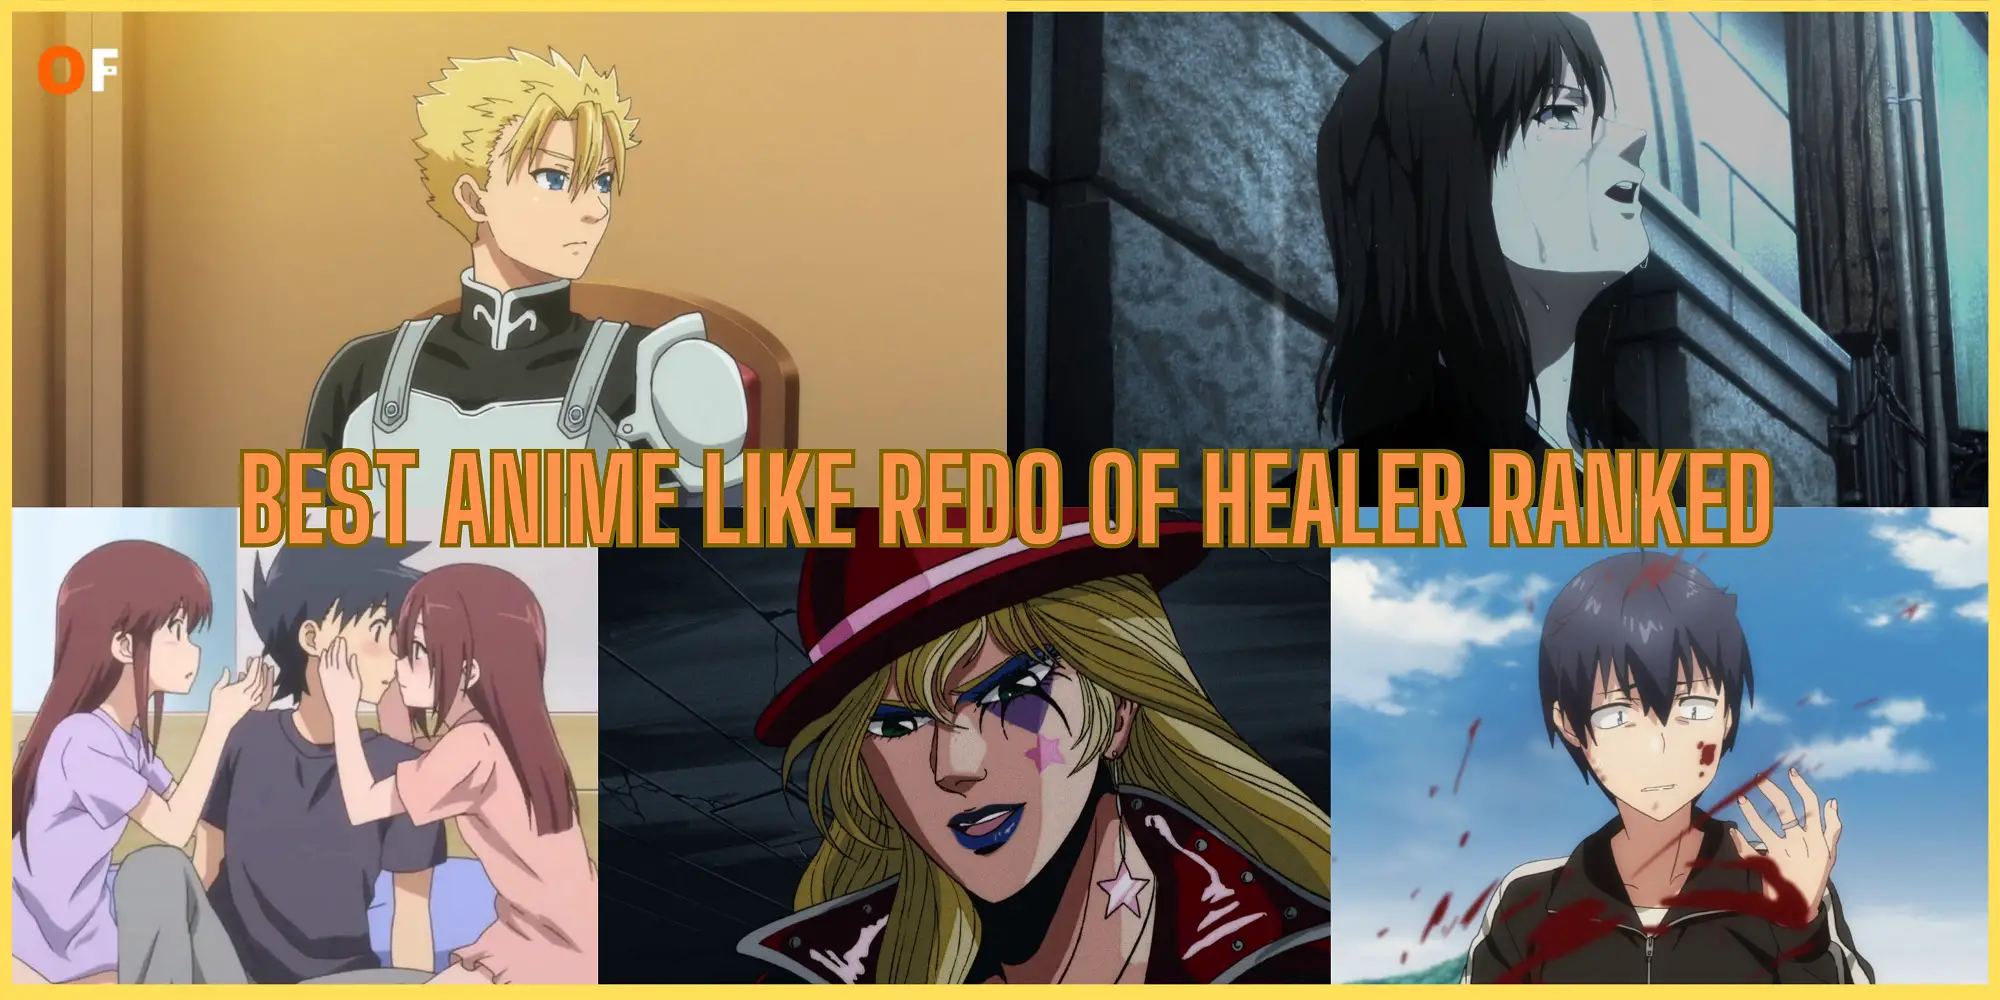 7 Anime Like Redo of Healer You Must See 